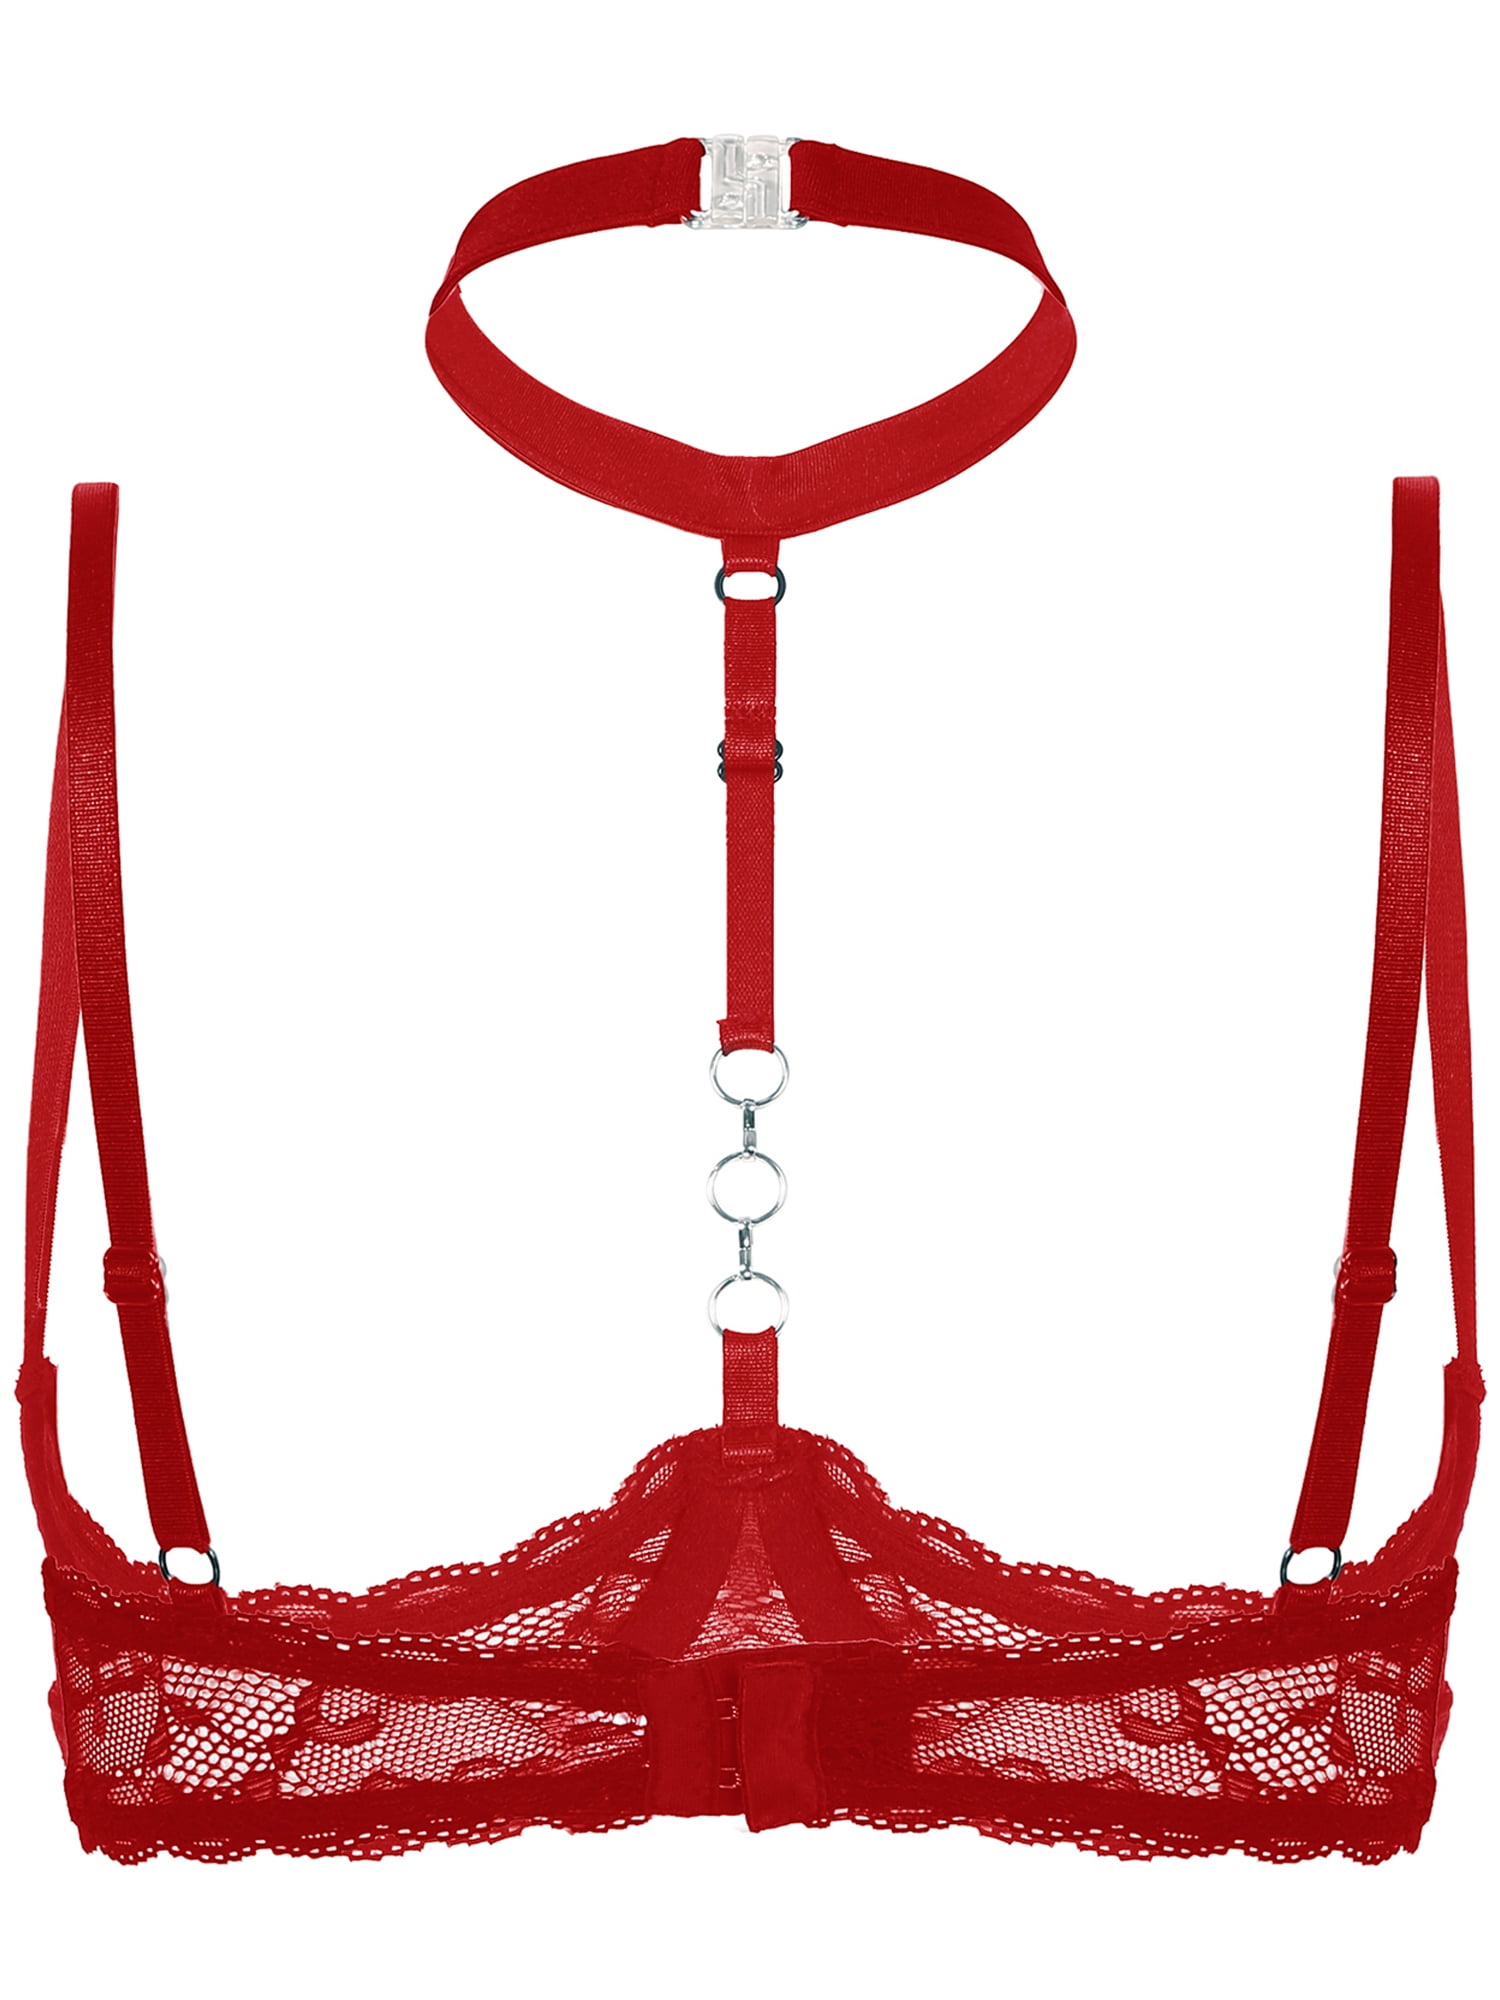 AiihooWomen's Sheer Lace Bikini Lingerie Set 1/4 Cup Push Up Shelf Bra Top  with Panties Briefs Underwear